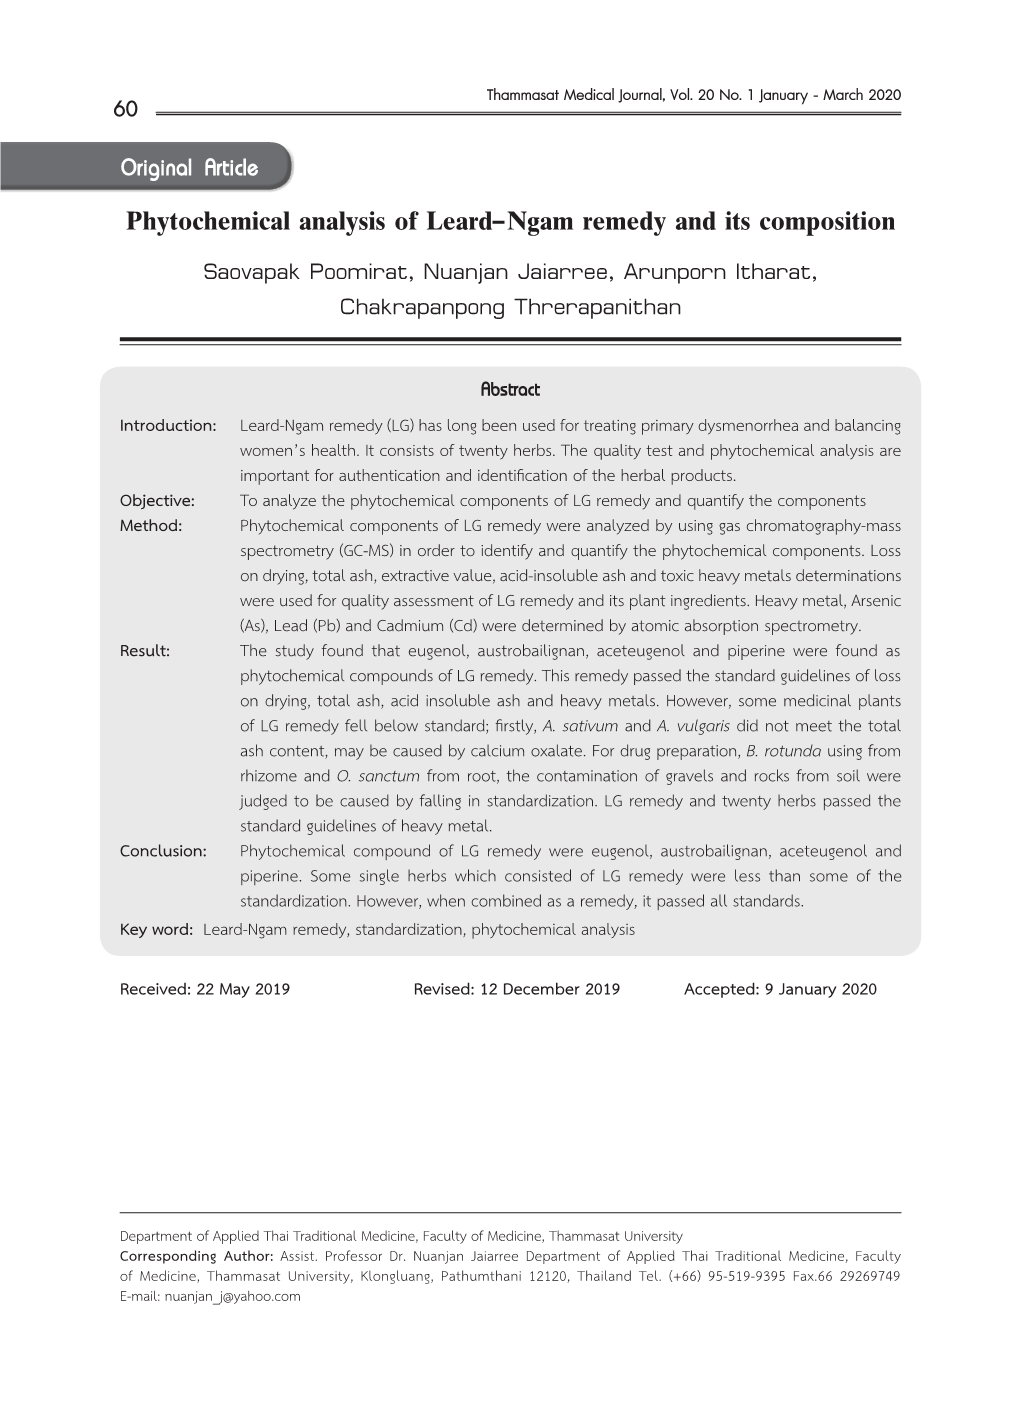 Phytochemical Analysis of Leard-Ngam Remedy and Its Composition Saovapak Poomirat, Nuanjan Jaiarree, Arunporn Itharat, Chakrapanpong Threrapanithan